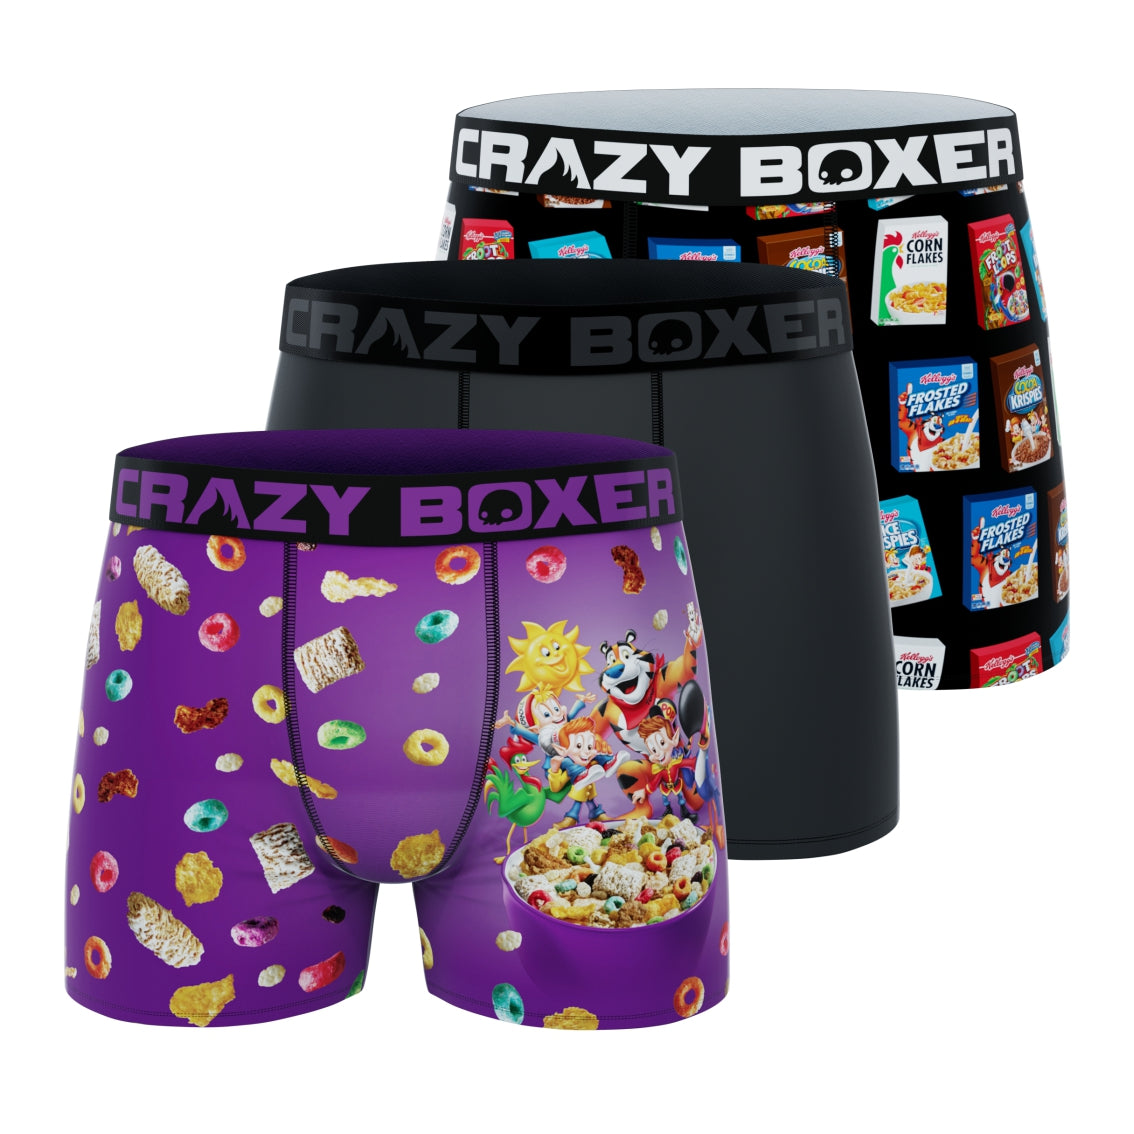 CRAZYBOXER Kellogg's Cereal Boxes Men's Boxer Briefs (3 pack